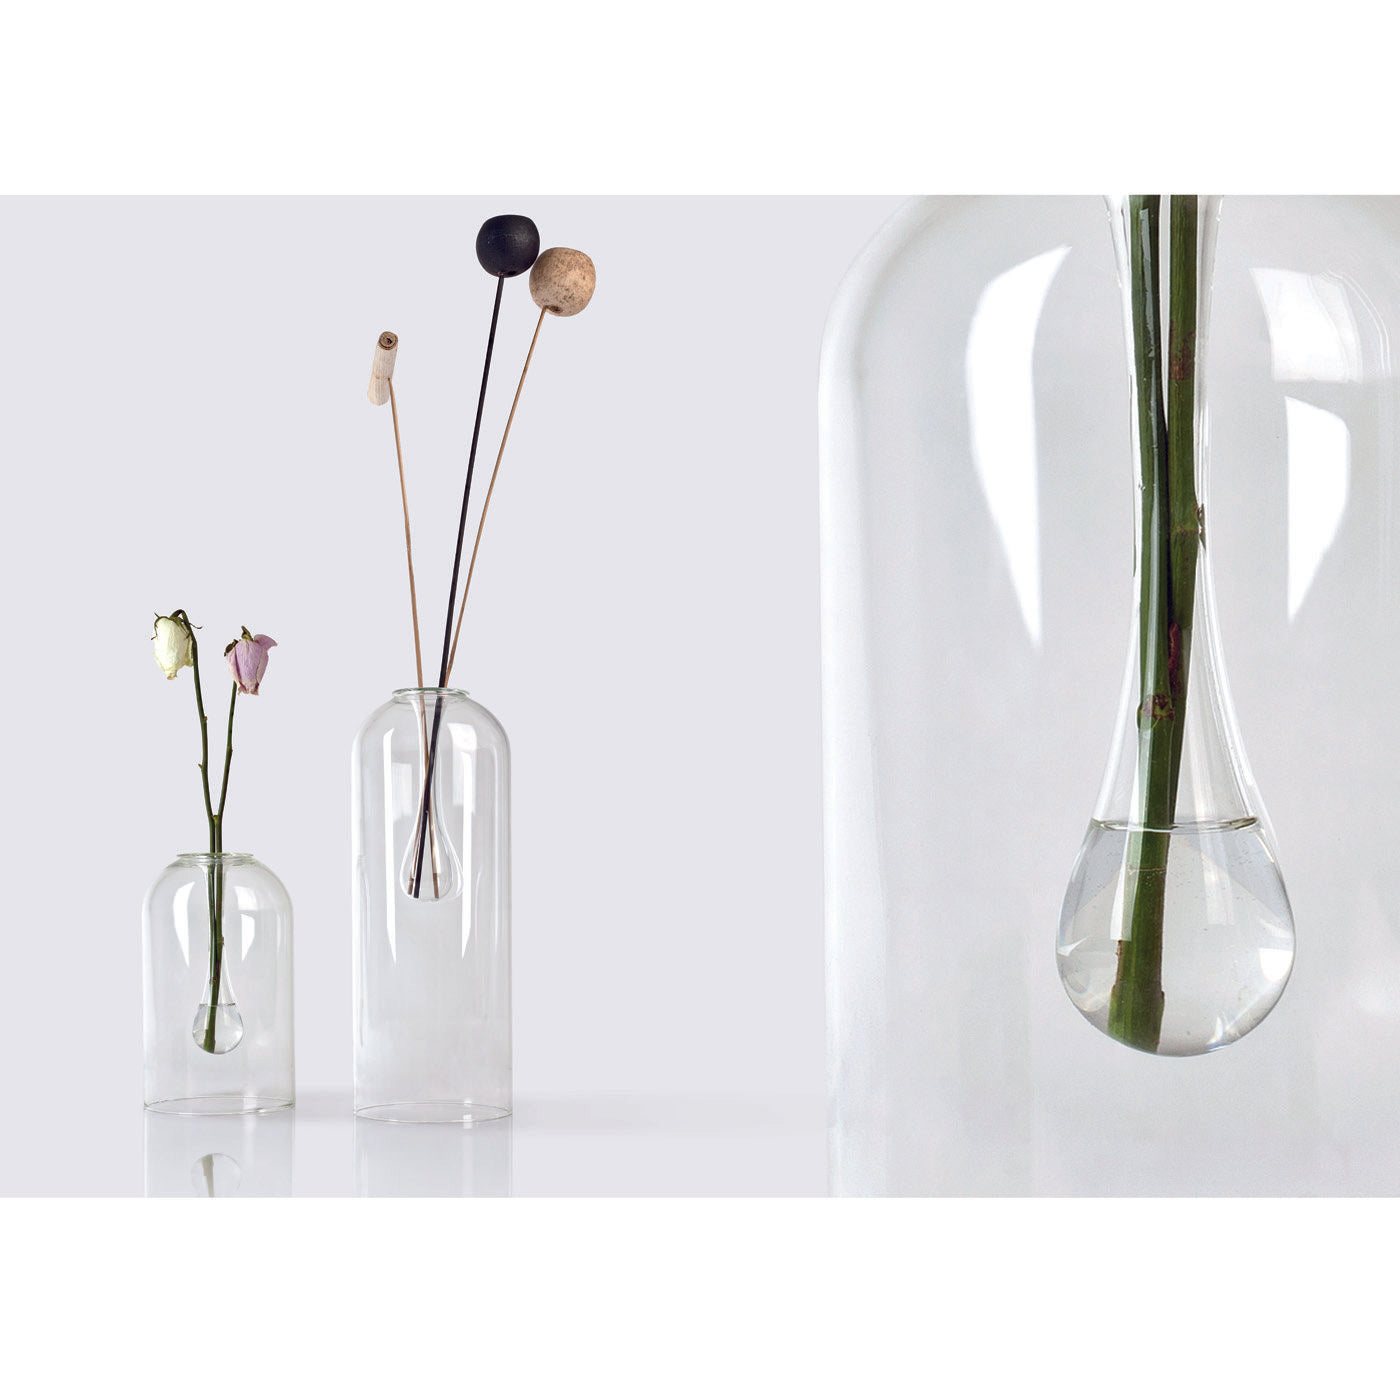 Tear Large Vase by Naessi Studio - Alternative view 1